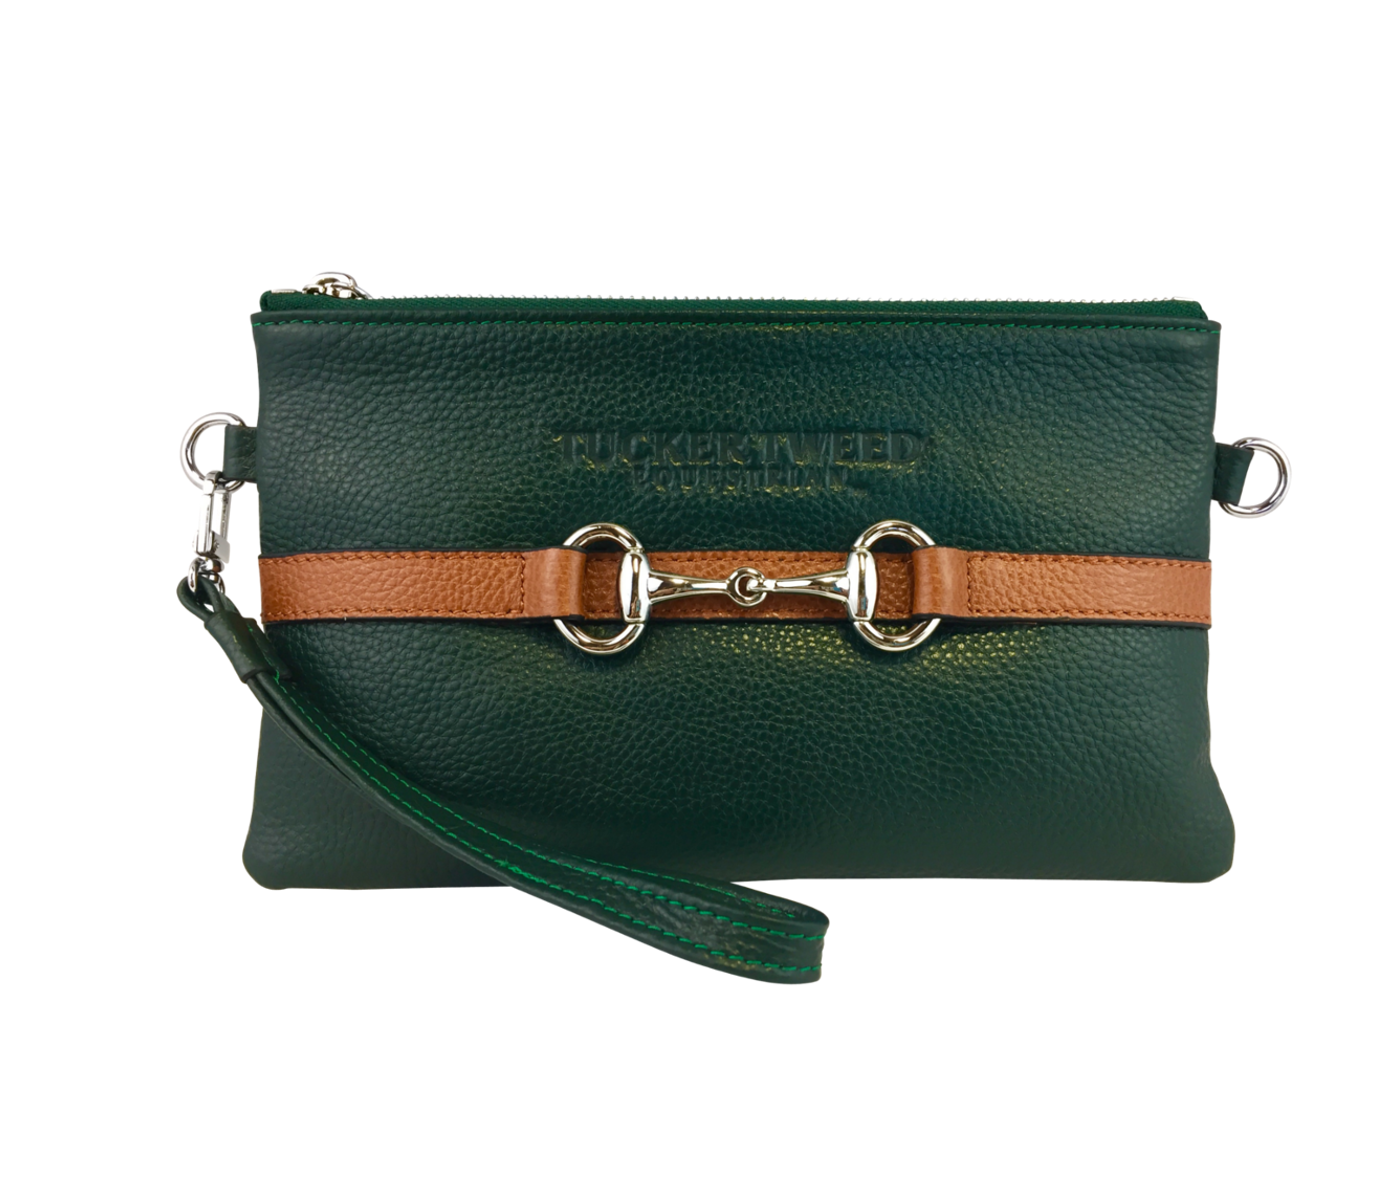 Tucker Tweed Leather Handbags Hunter Green/Chestnut The Wellington Wristlet